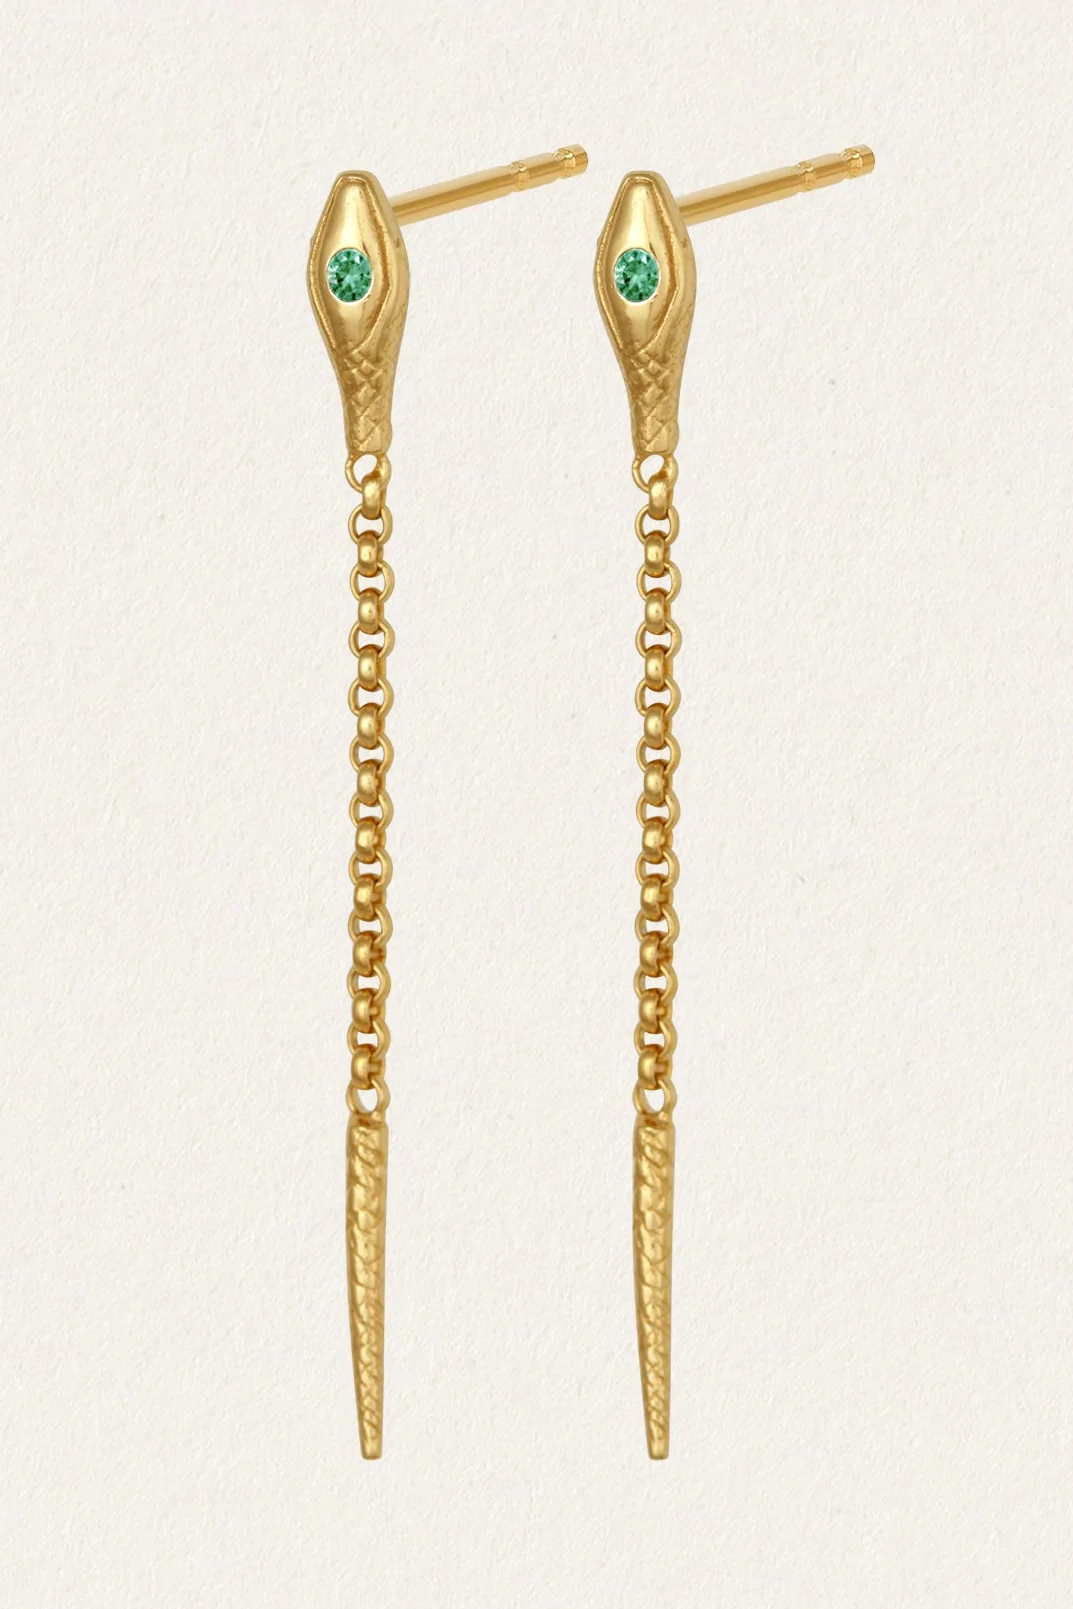 Althea Emerald Earrings - Gold